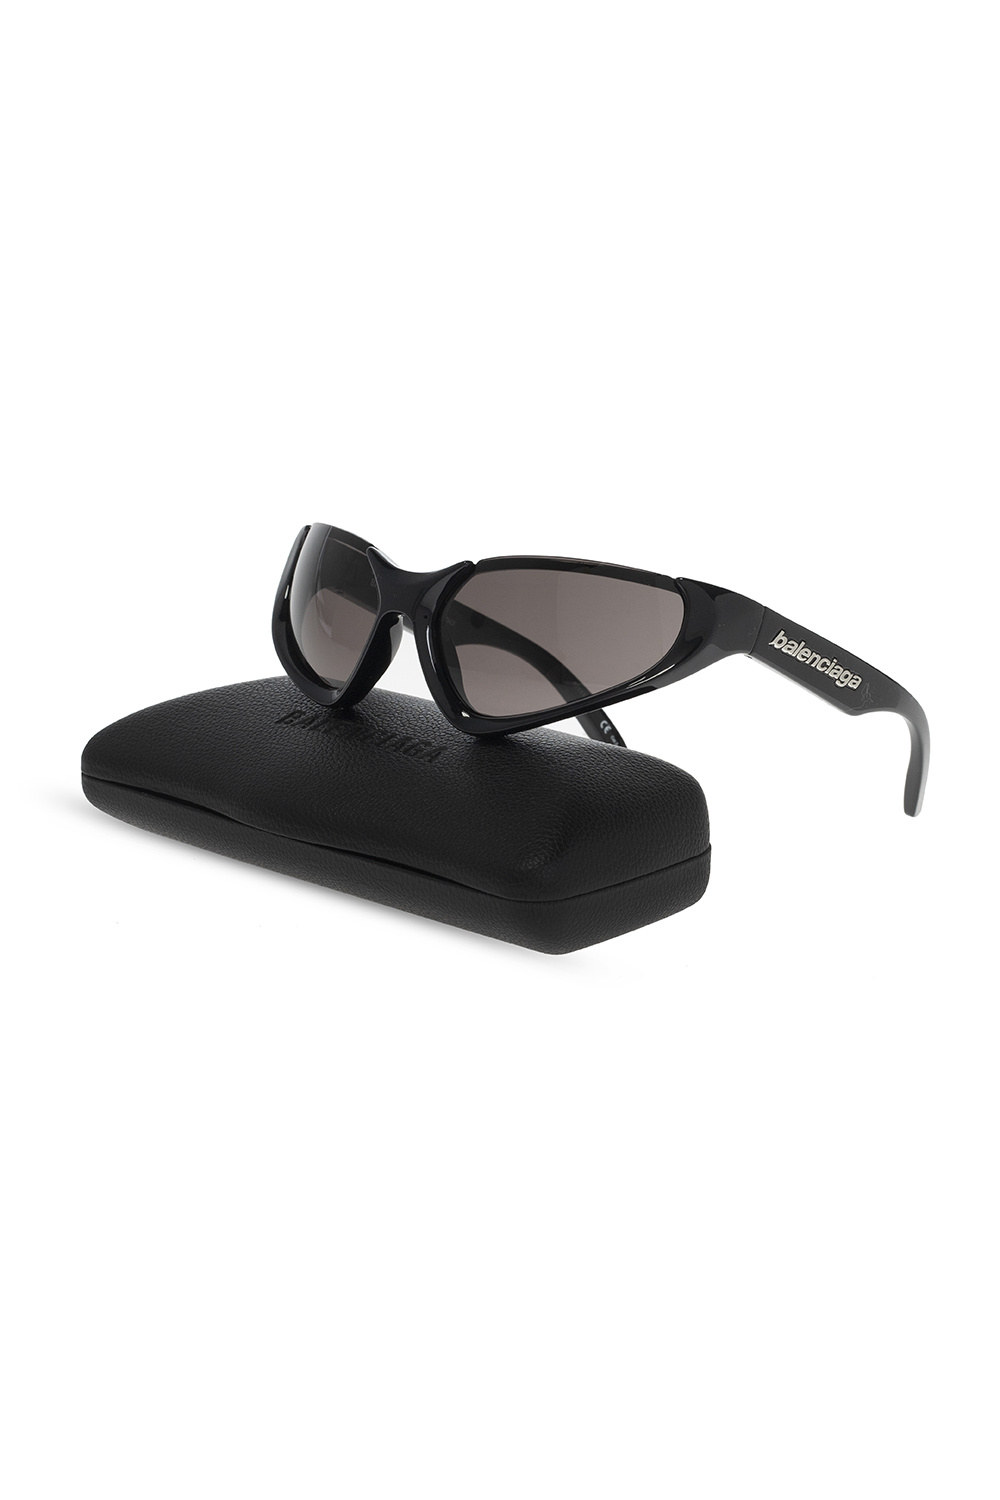 Balenciaga Xpander BB0202s-001 Wrap Around Black Sunglasses ...